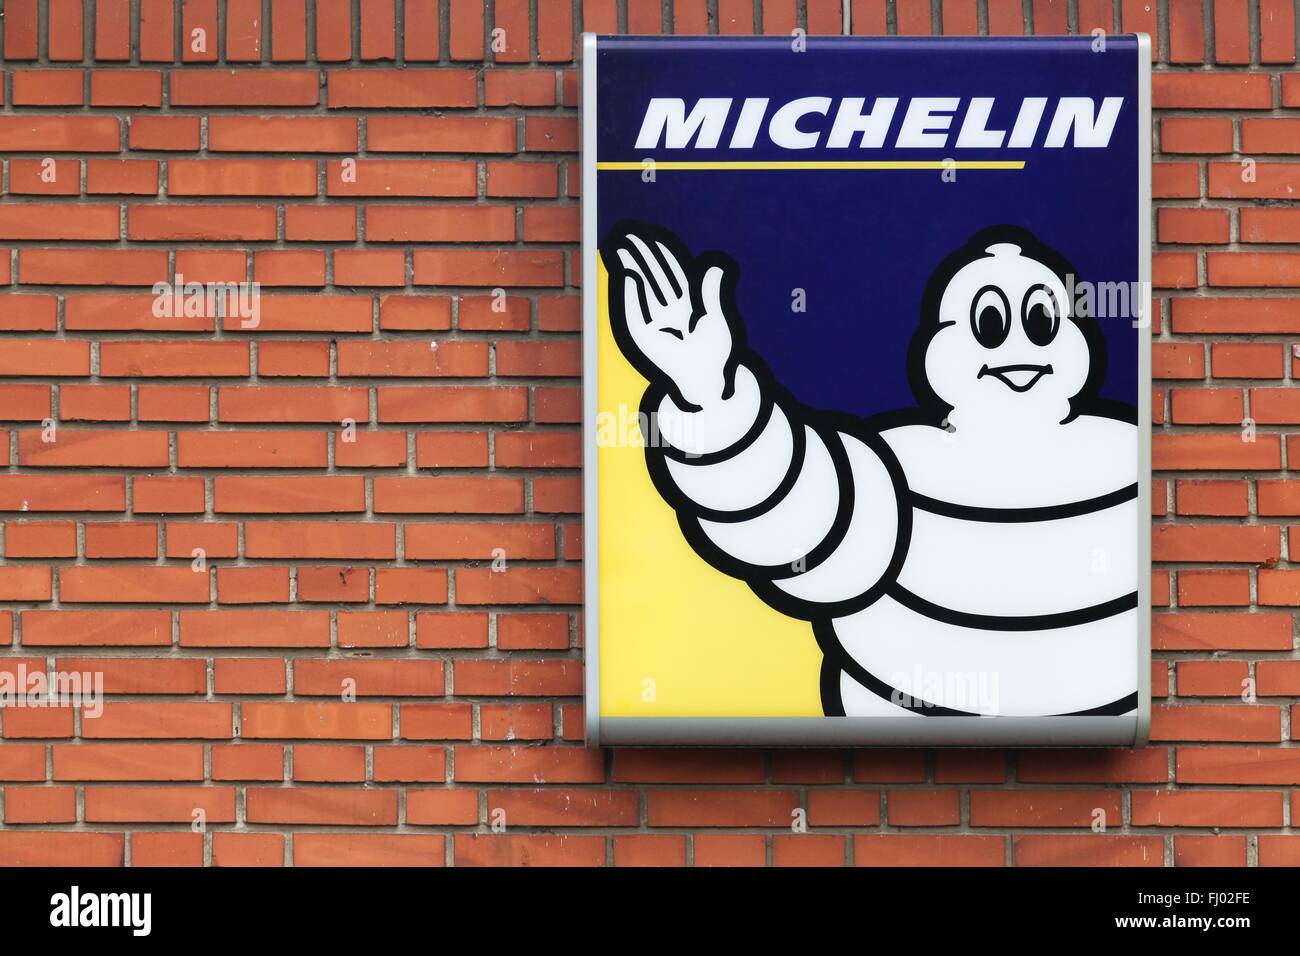 Michelin logo on a wall Stock Photo